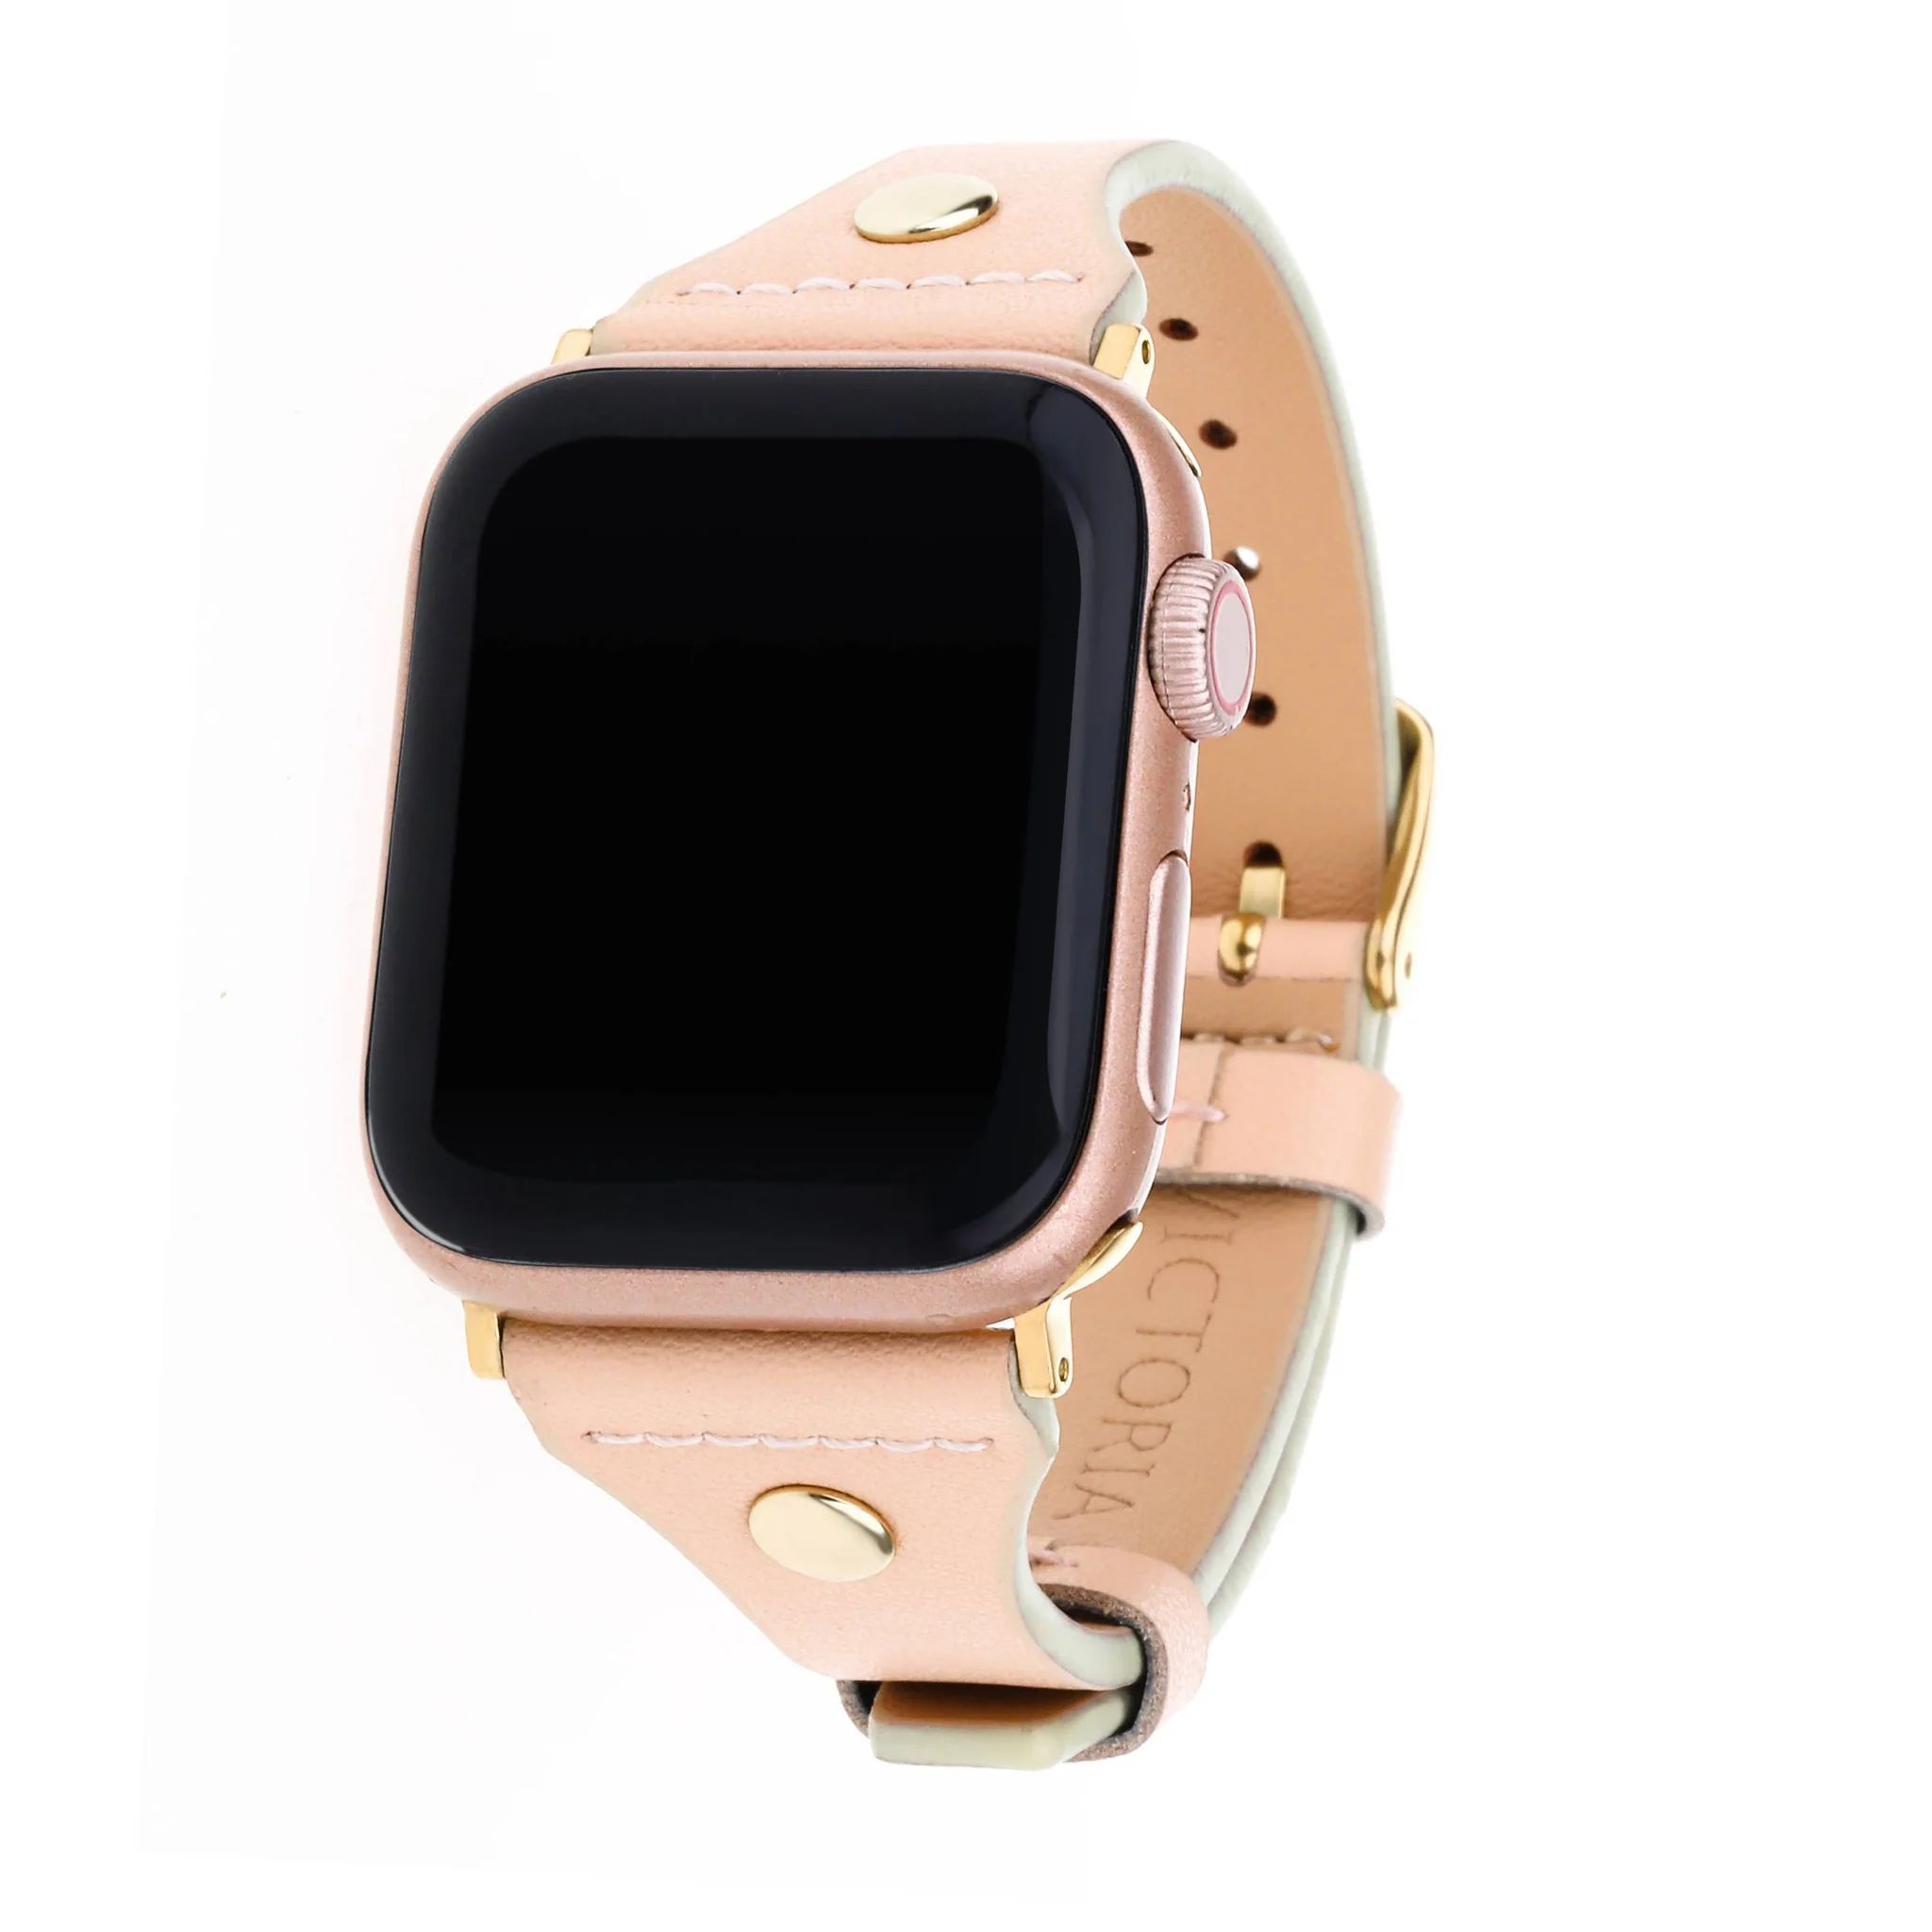 Blush on Gold Apple Watch | Victoria Emerson